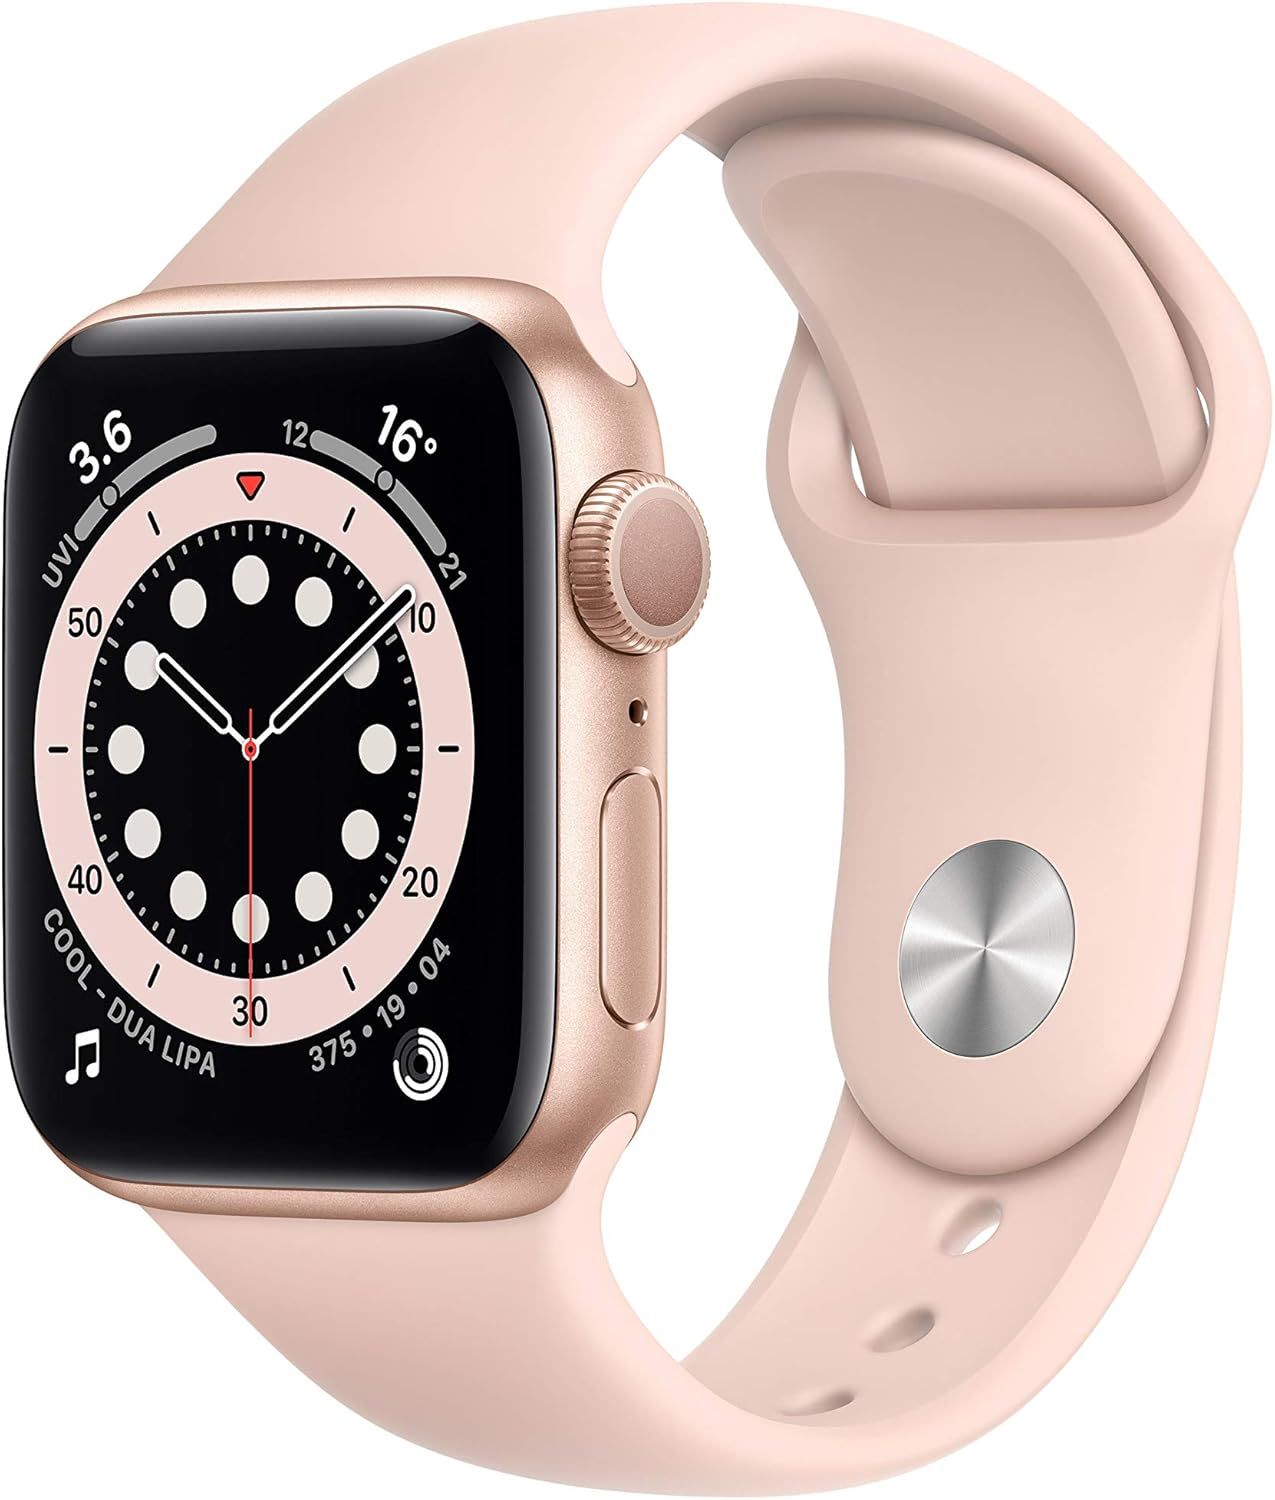 Apple Watch Series 6 GPS, 40mm Gold Aluminium Case with Pink Sand Sport Band - Regular | Amazon (UK)